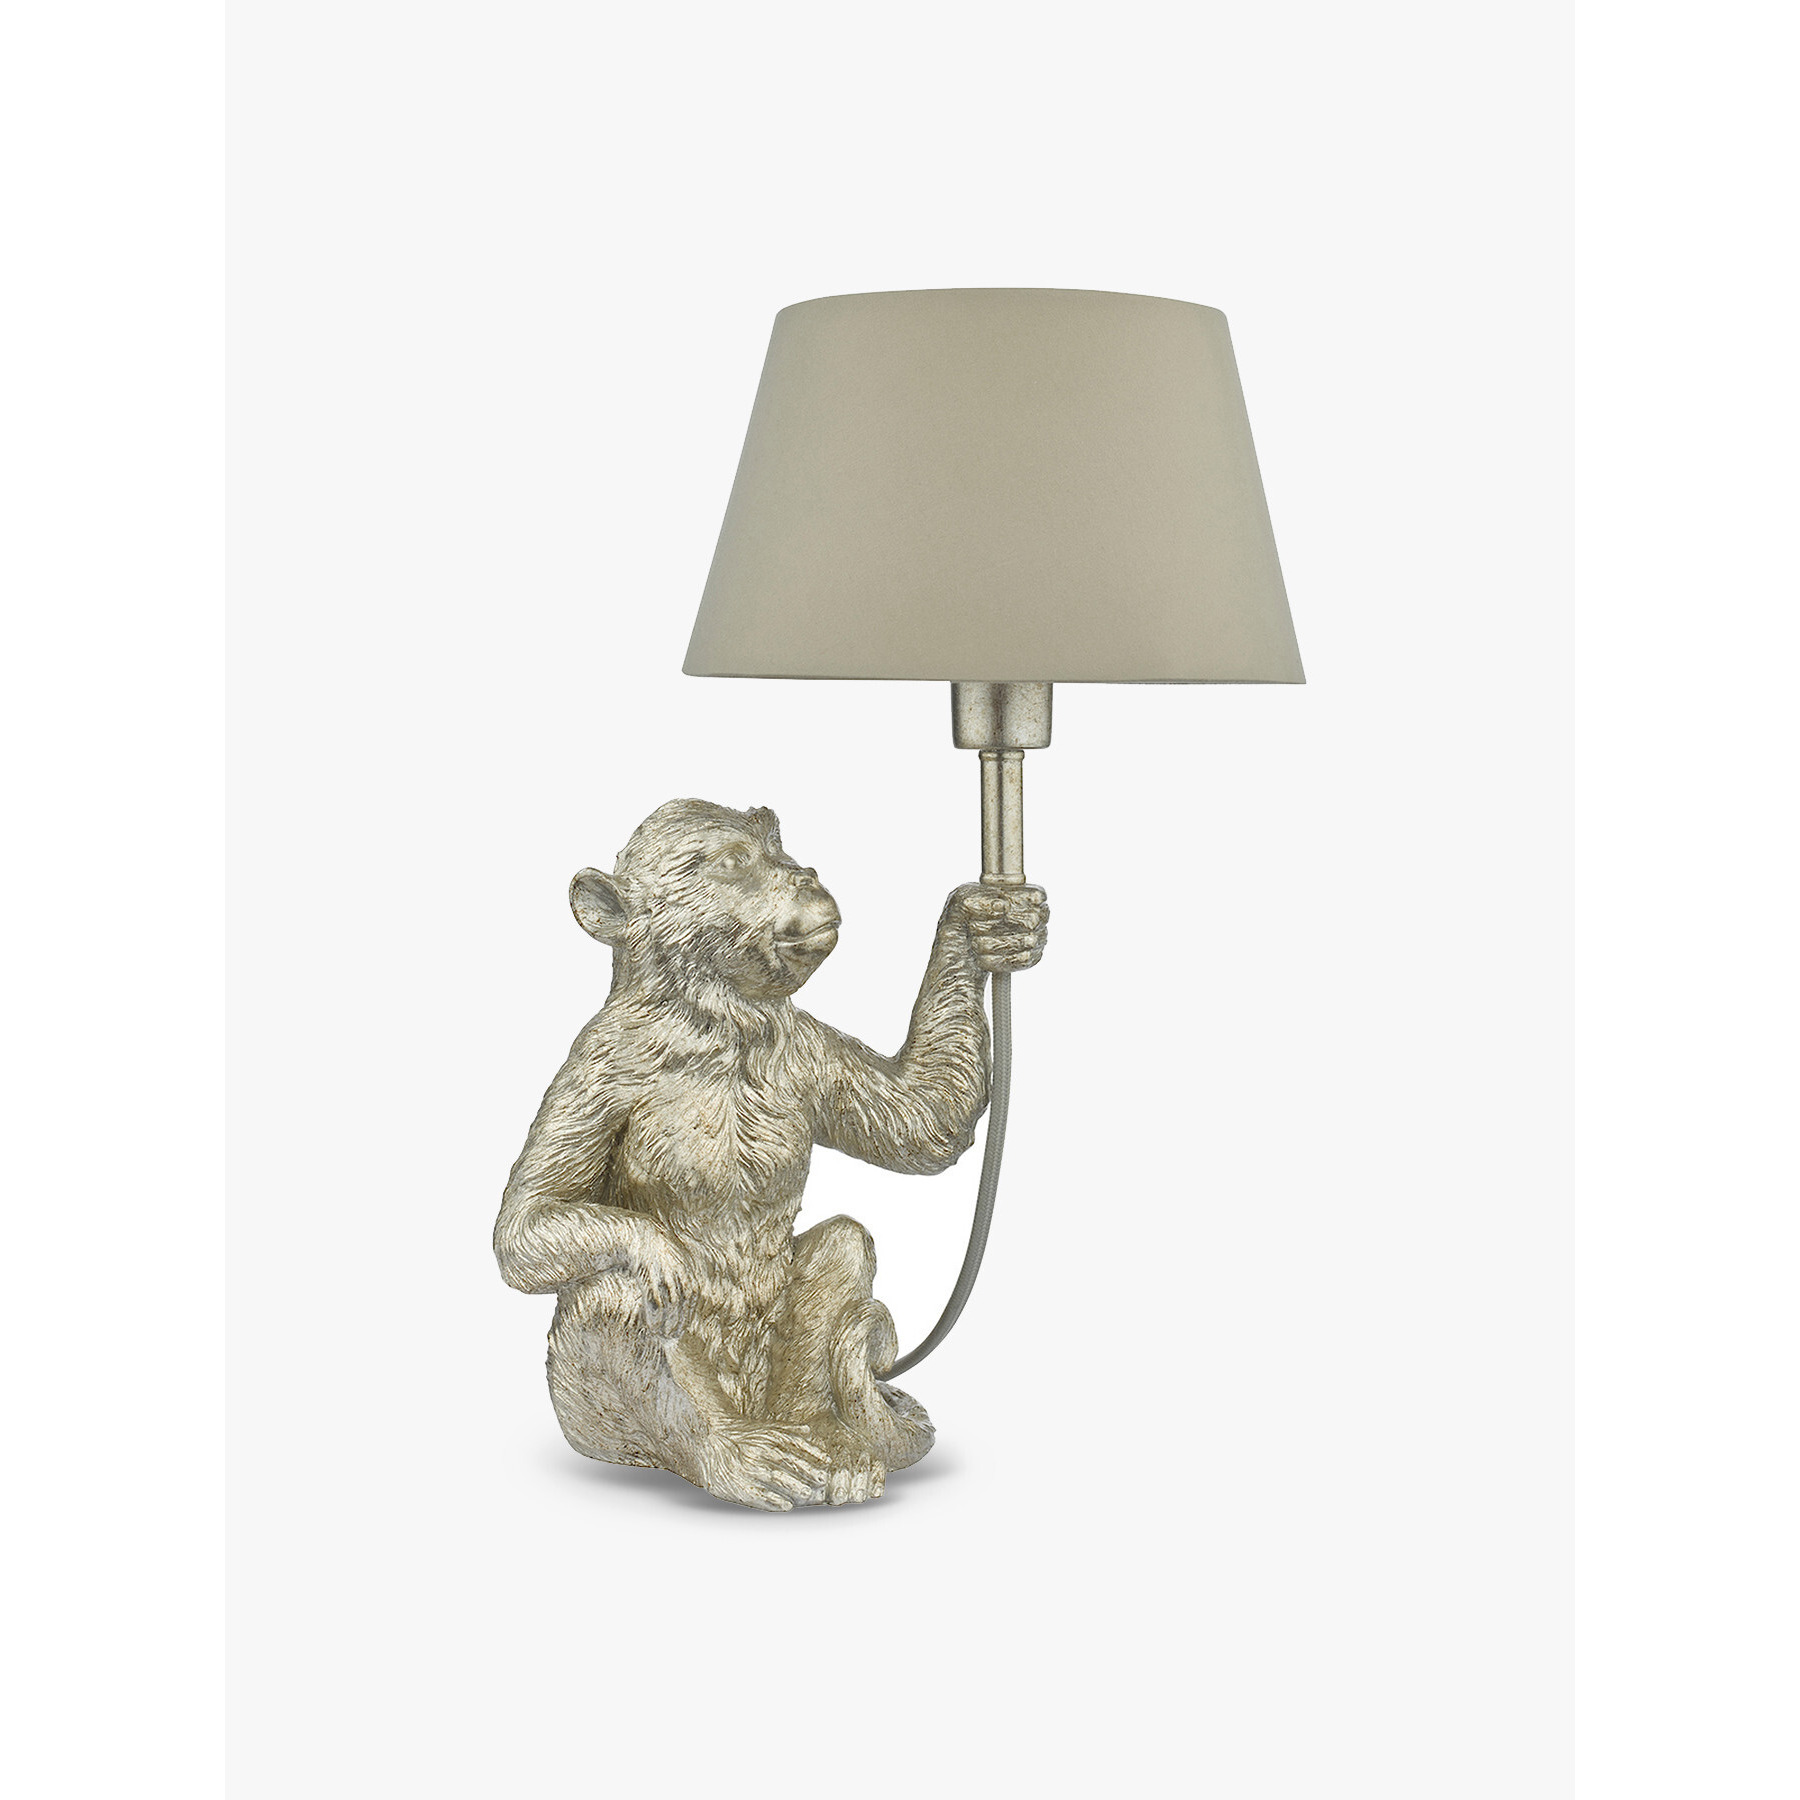 Dar Lighting Zira 1 Light Monkey Table Lamp with Shade Silver - image 1